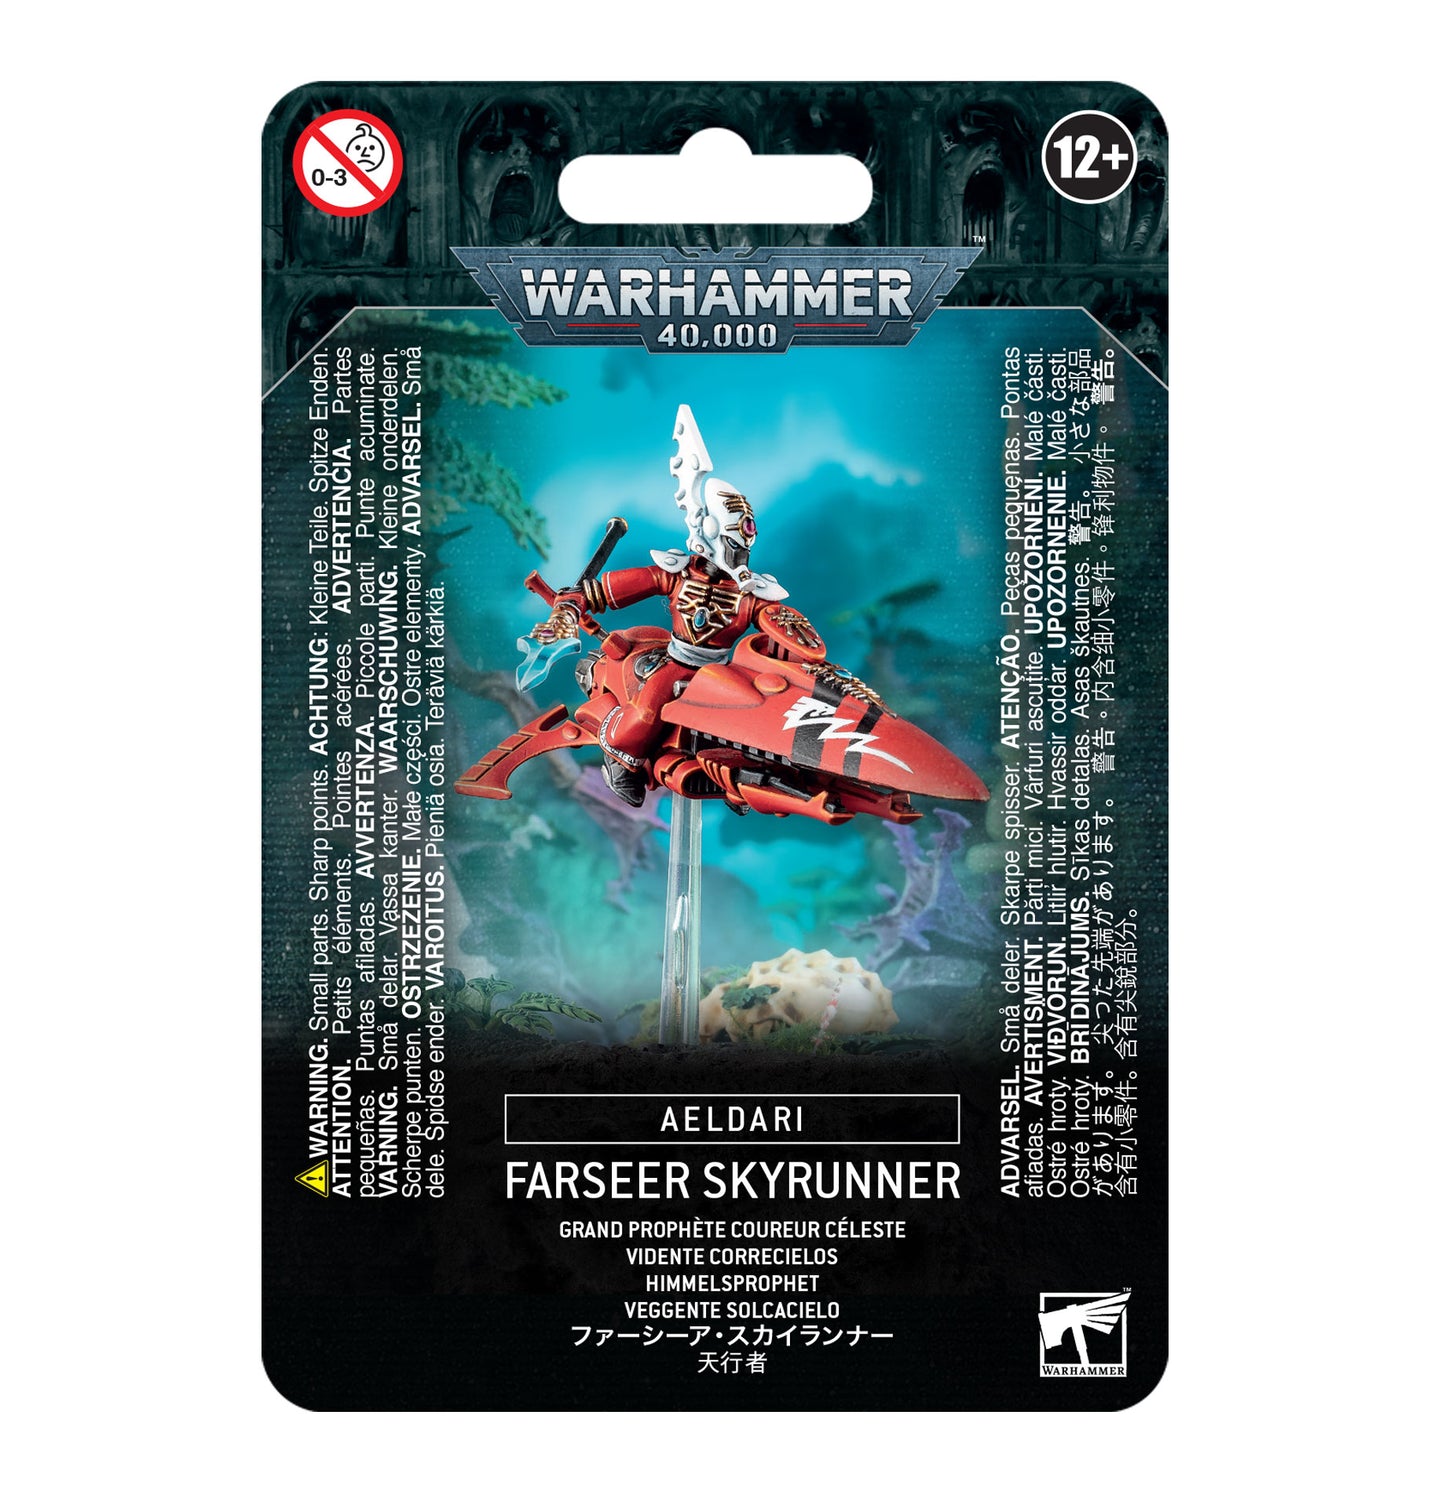 Aeldari Farseer Skyrunner, Warhammer 40,000